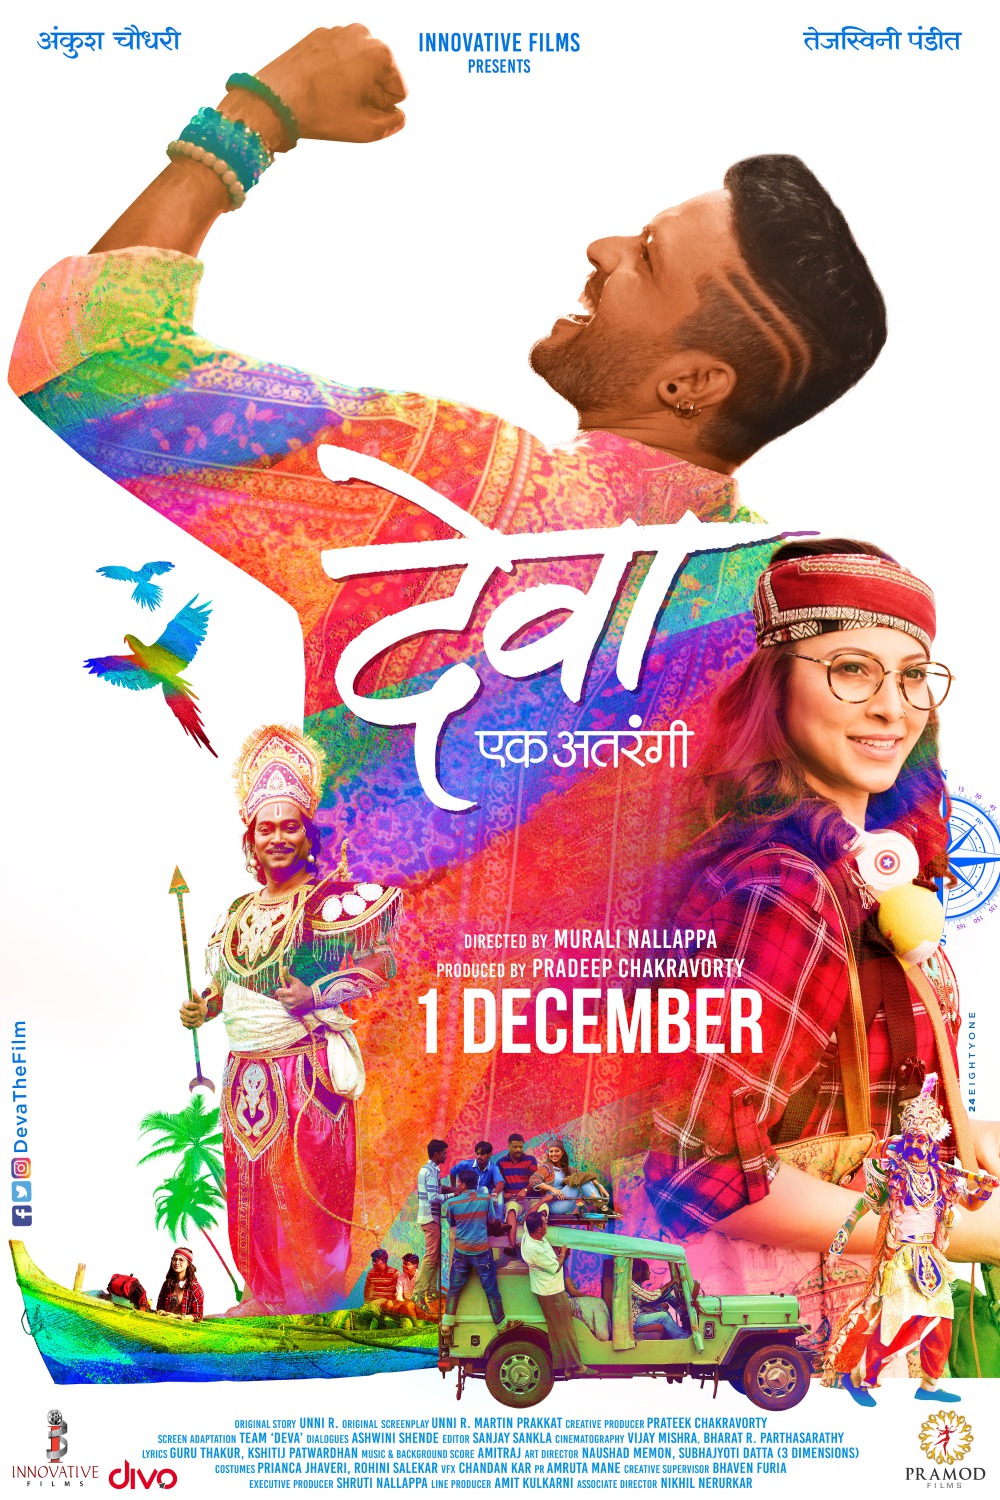 Extra Large Movie Poster Image for Deva Ek Atarangee 